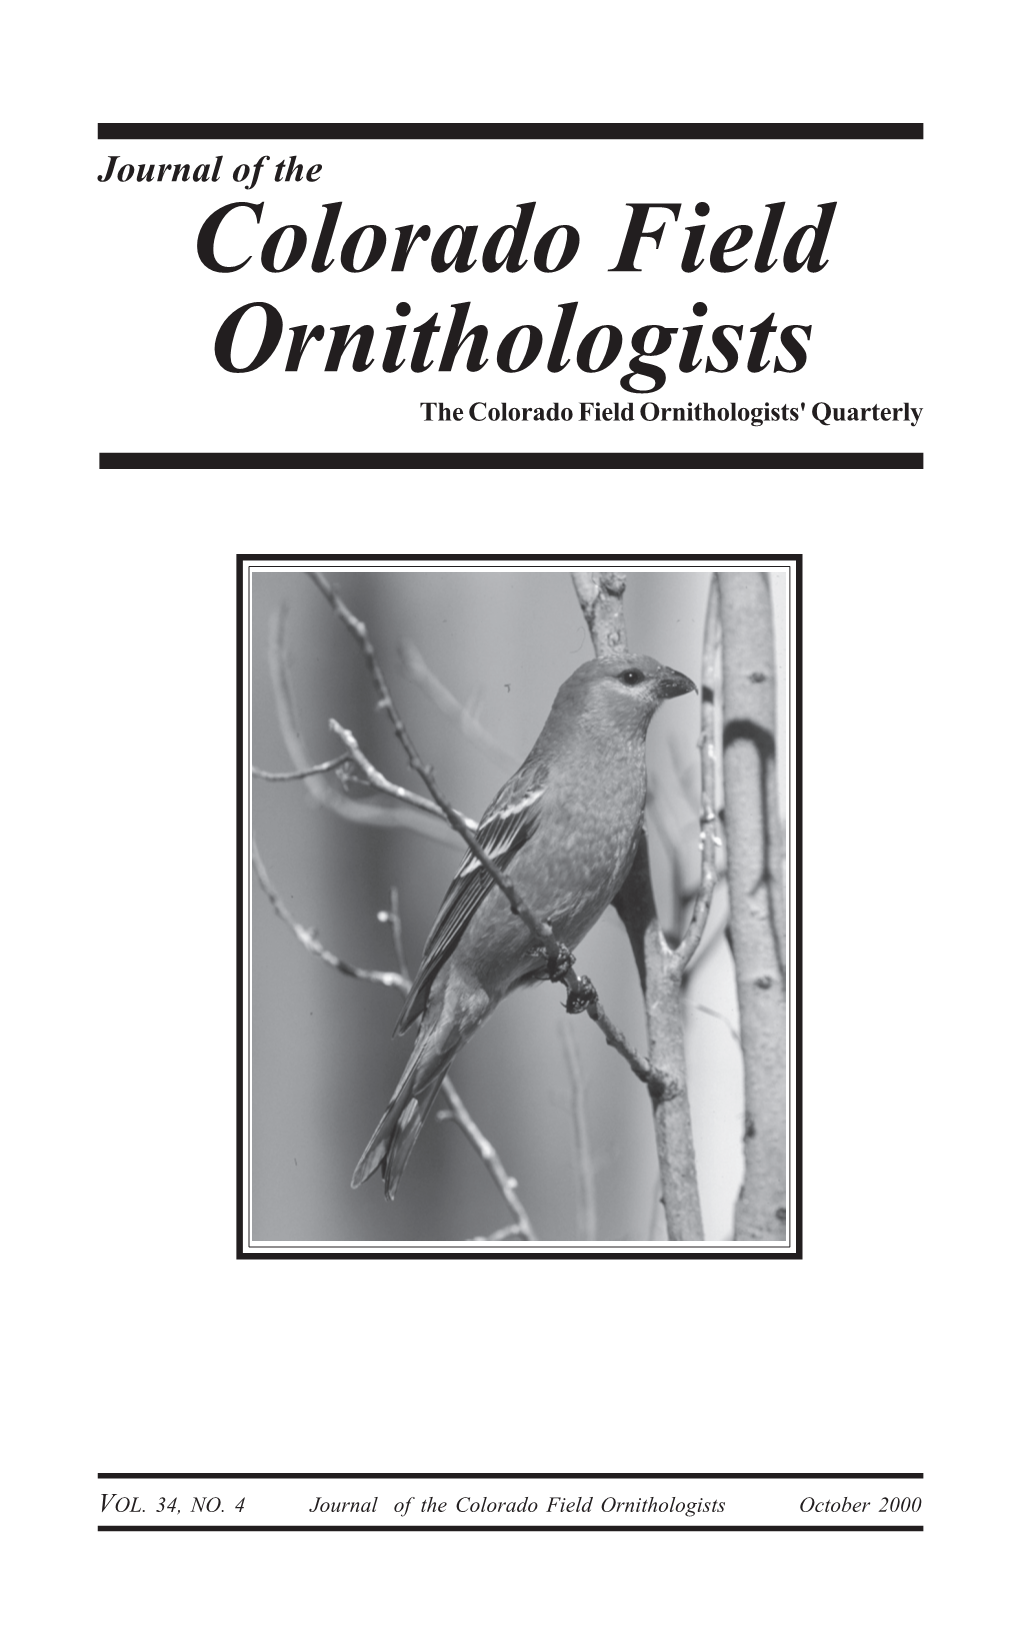 Colorado Field Ornithologists the Colorado Field Ornithologists' Quarterly